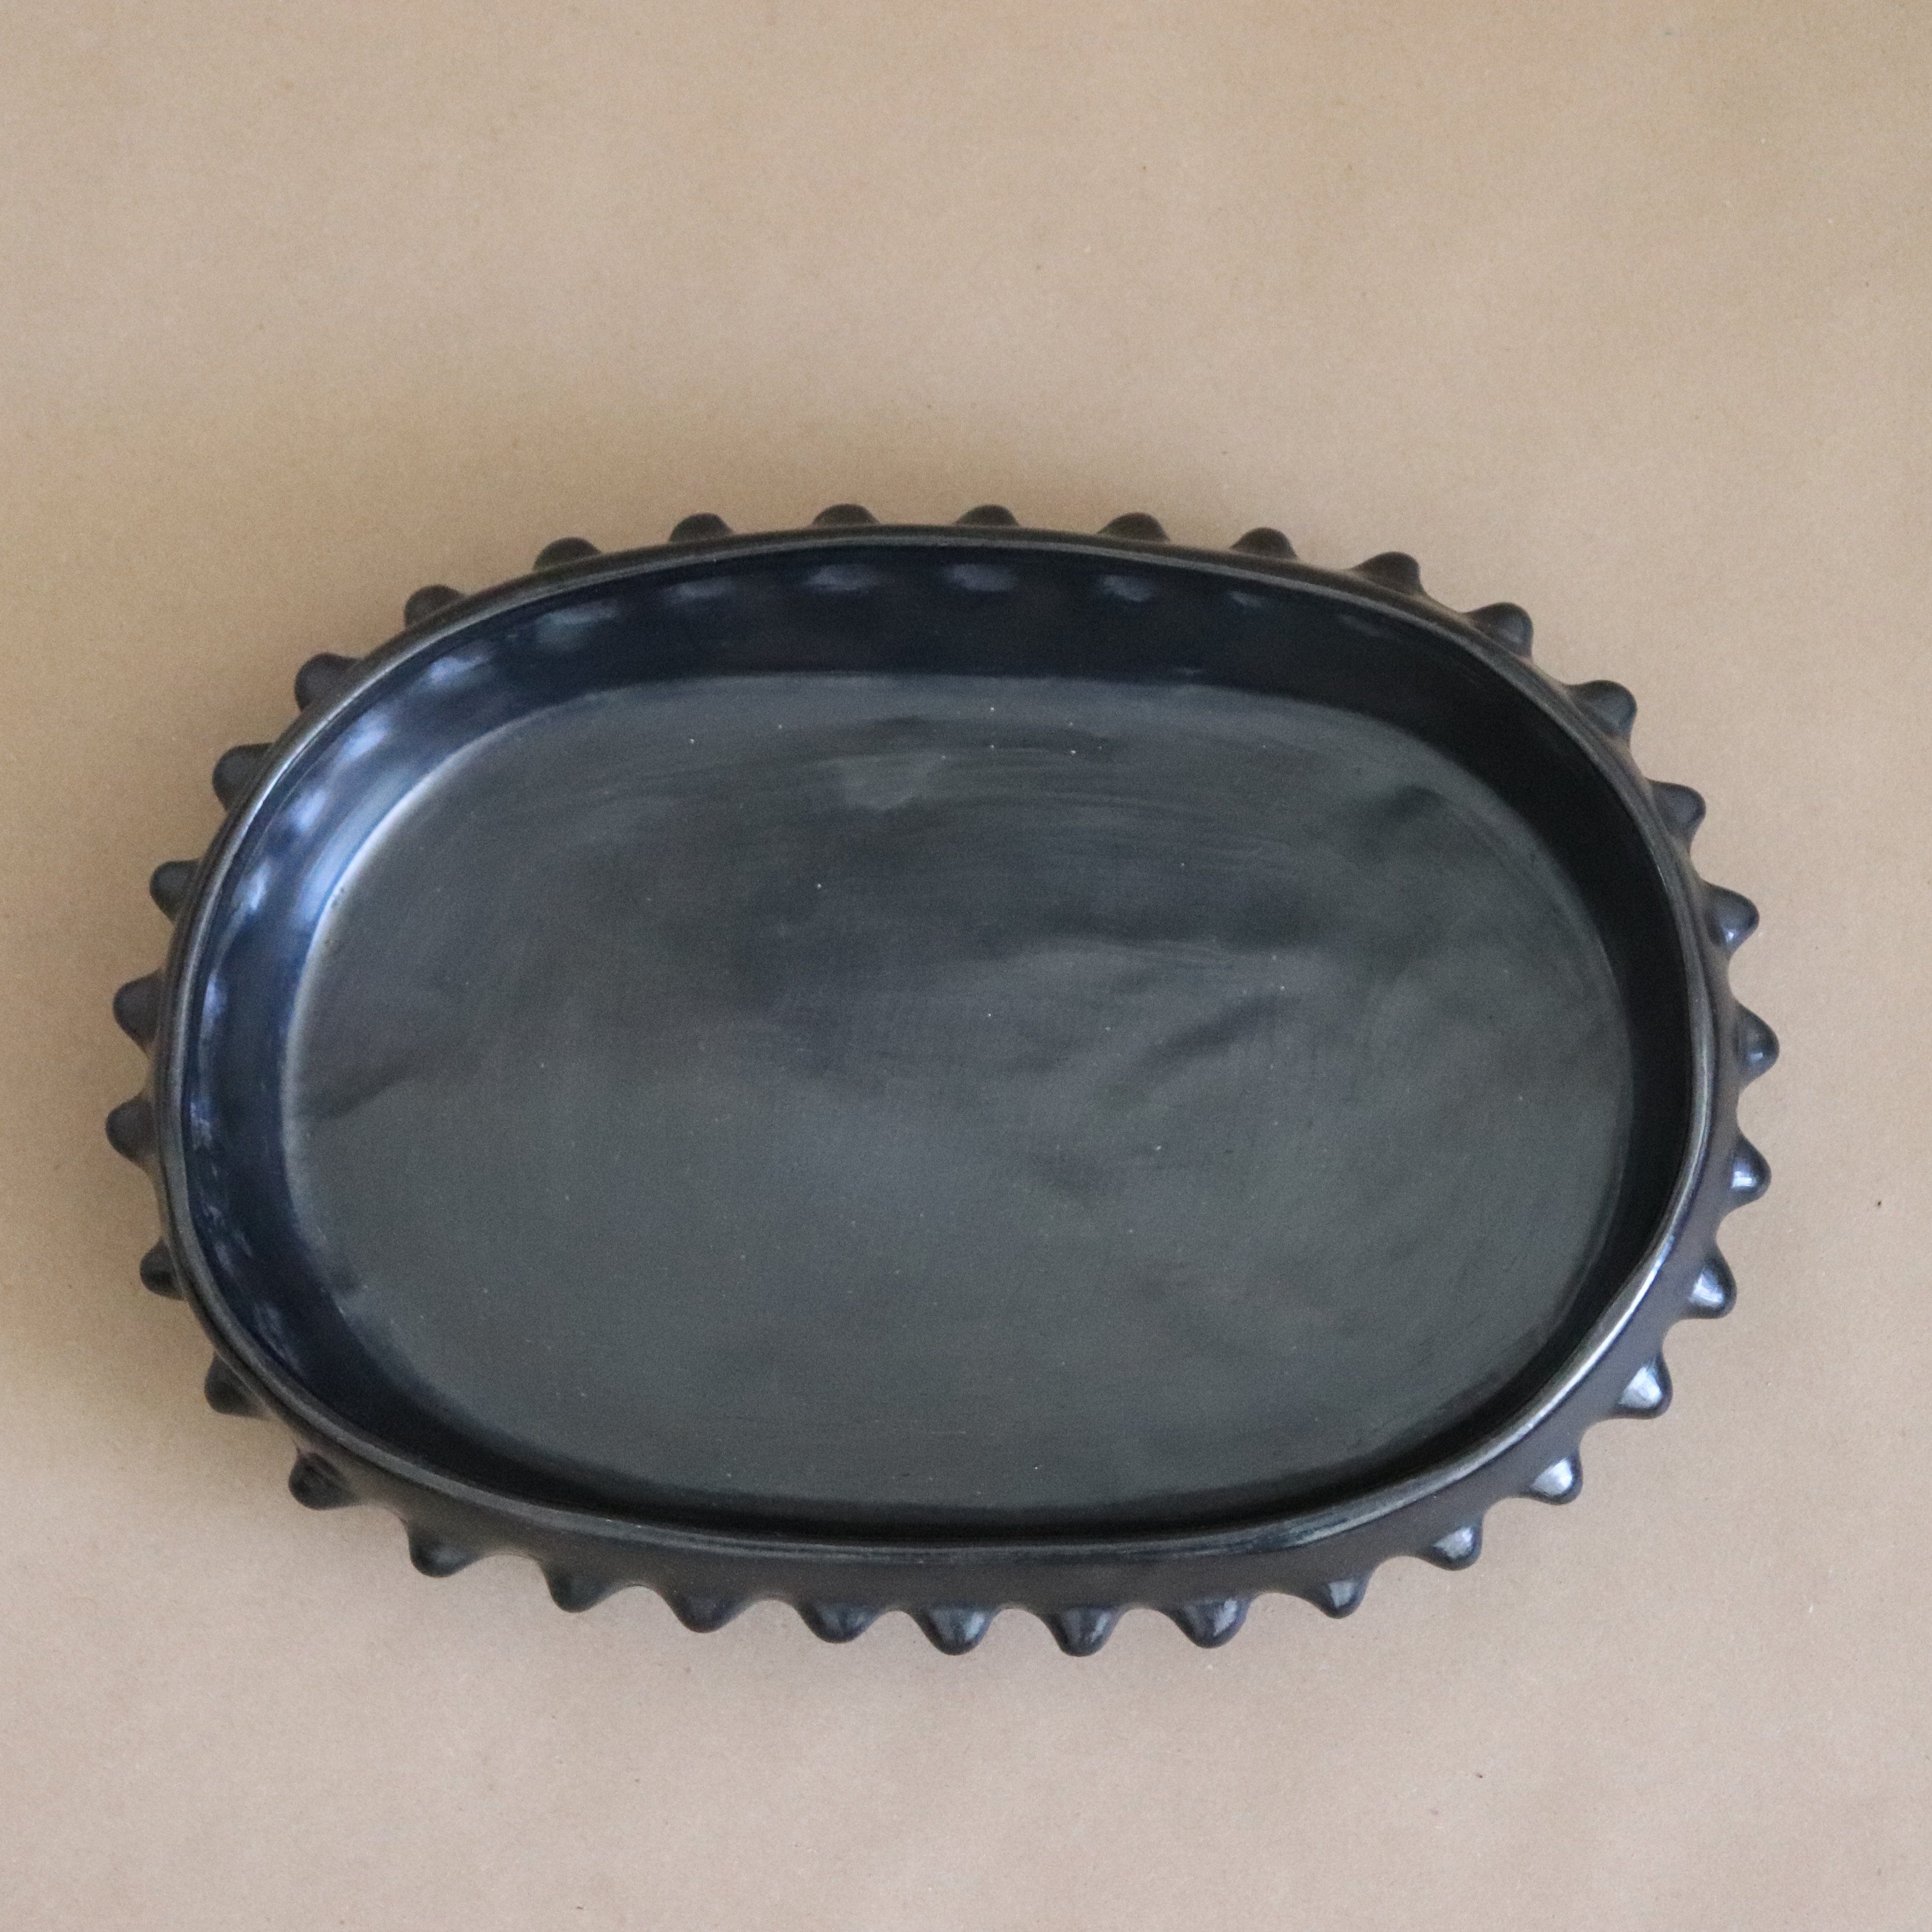 ONORA Decor Prehispanic Silver / Black Clay Platter